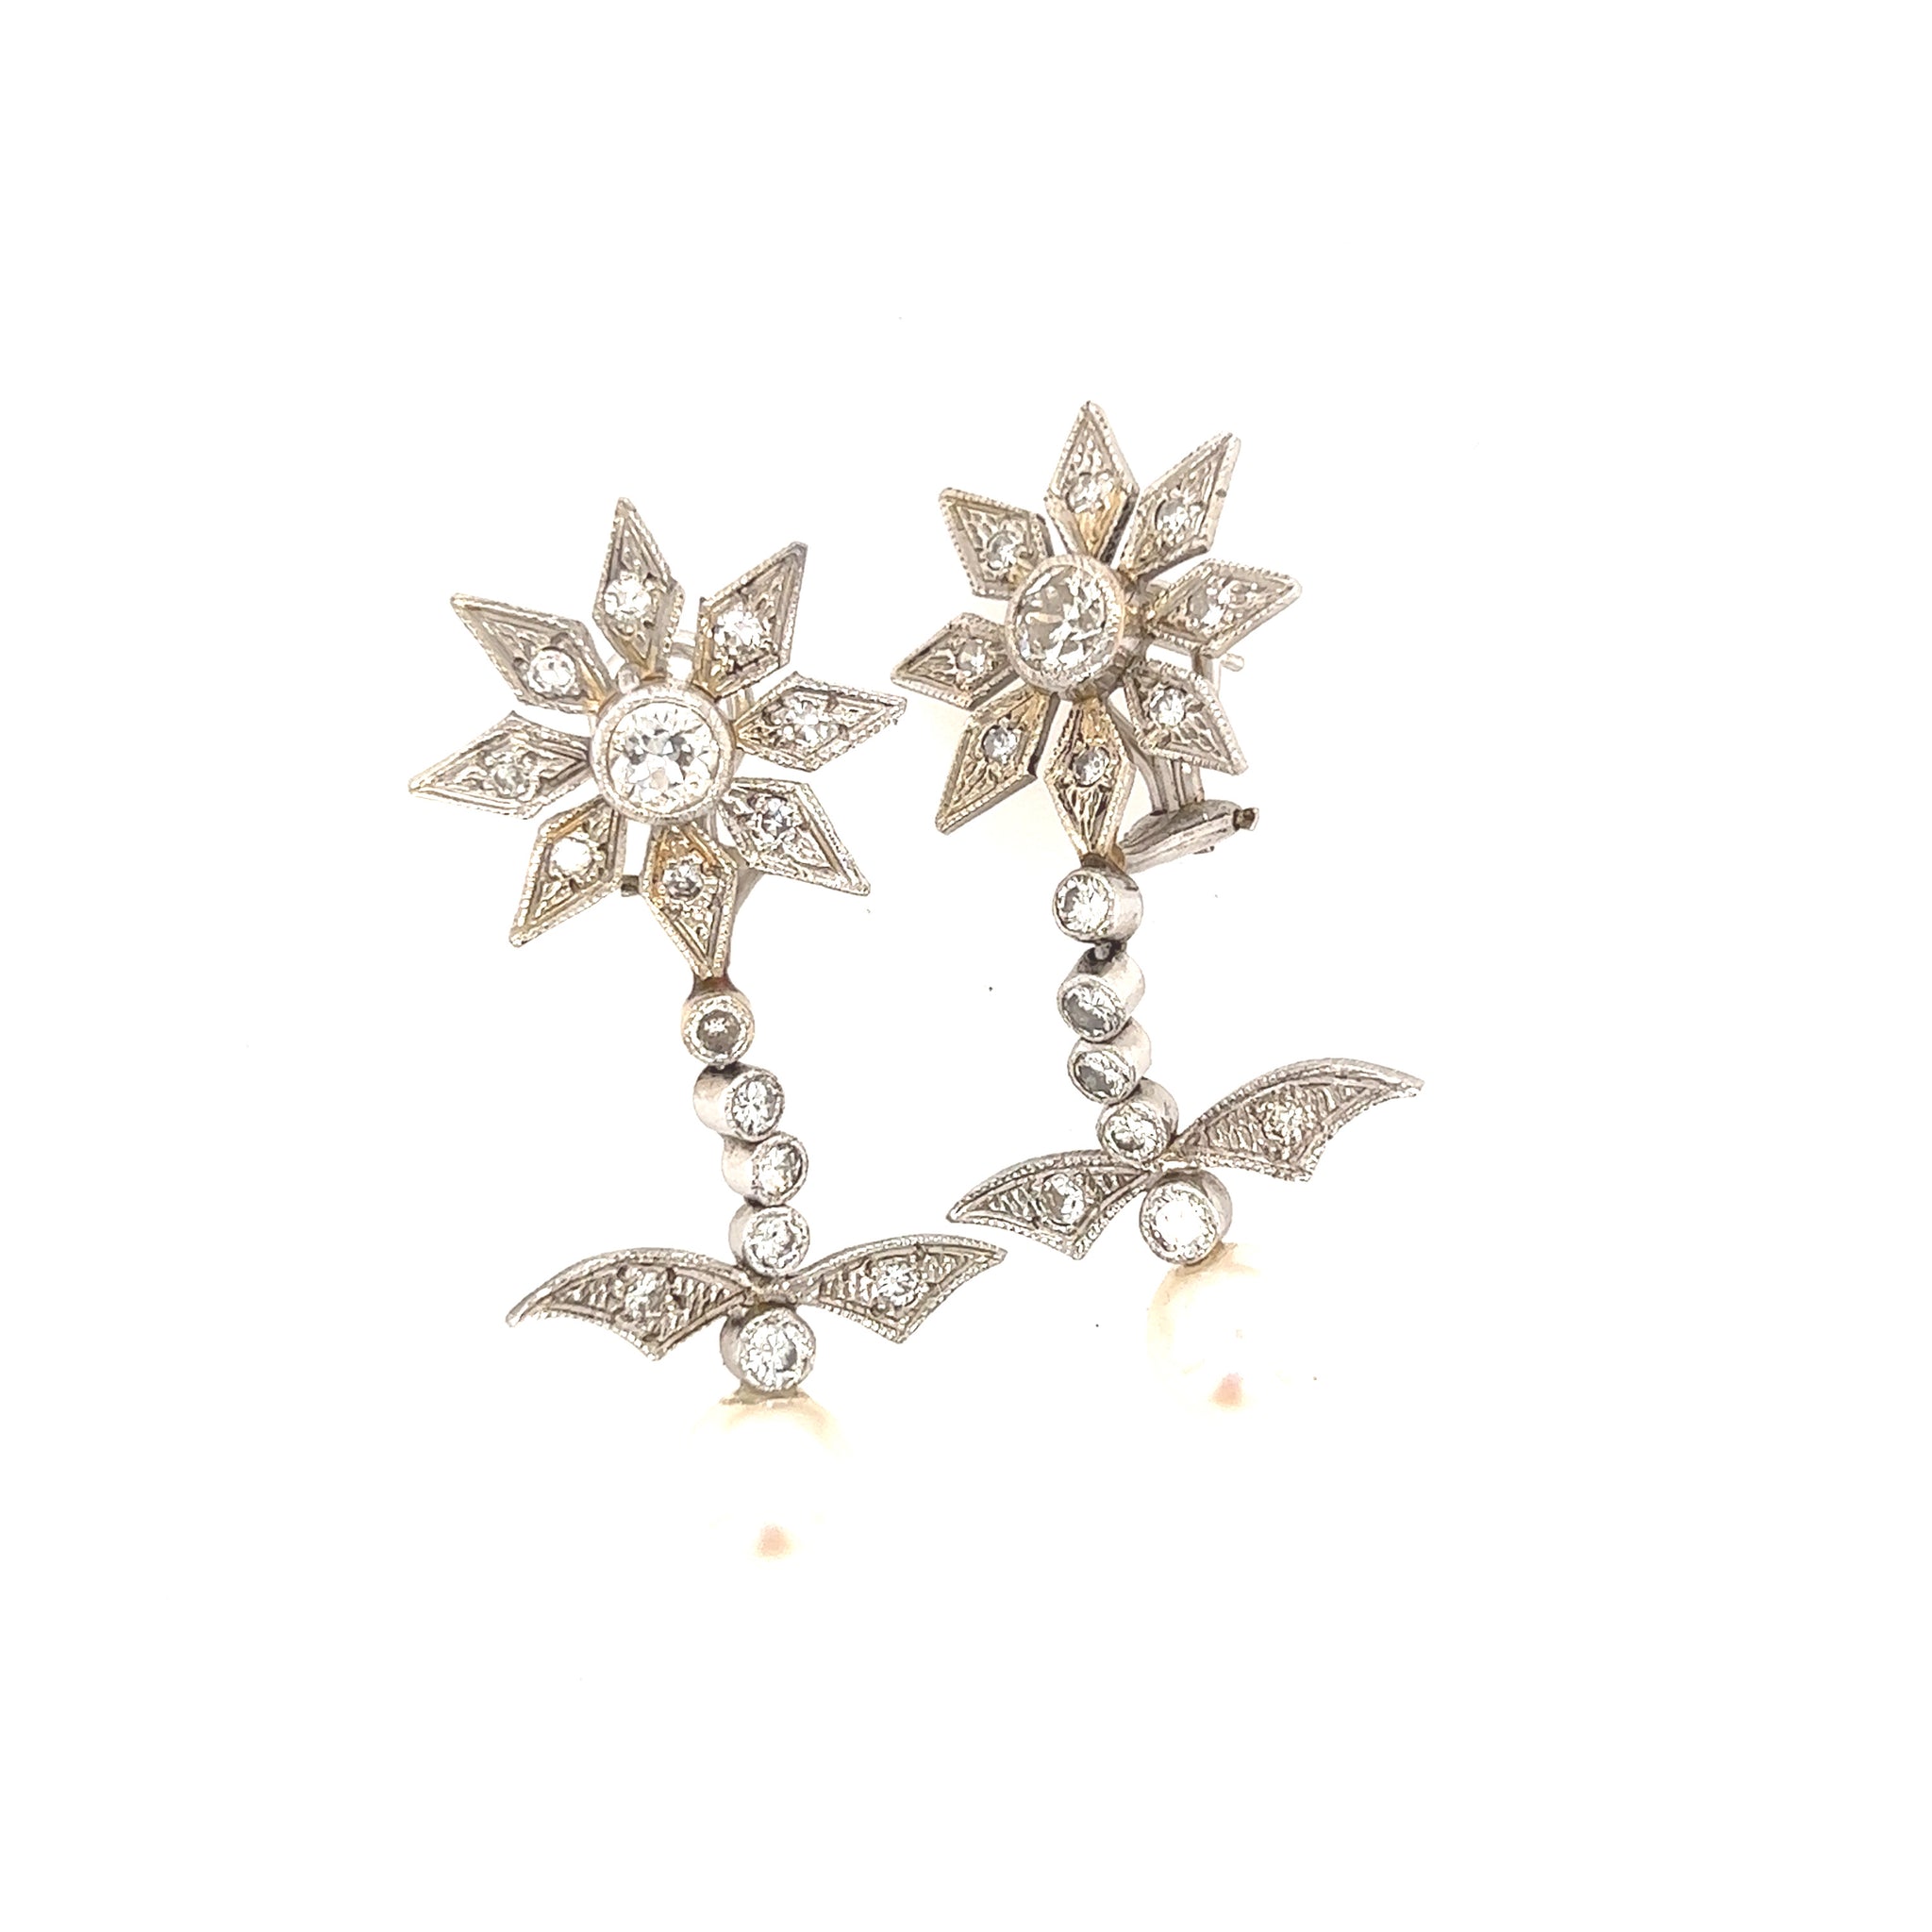 14K White Gold Diamond and Pearl Flower Drop Dangle Earrings